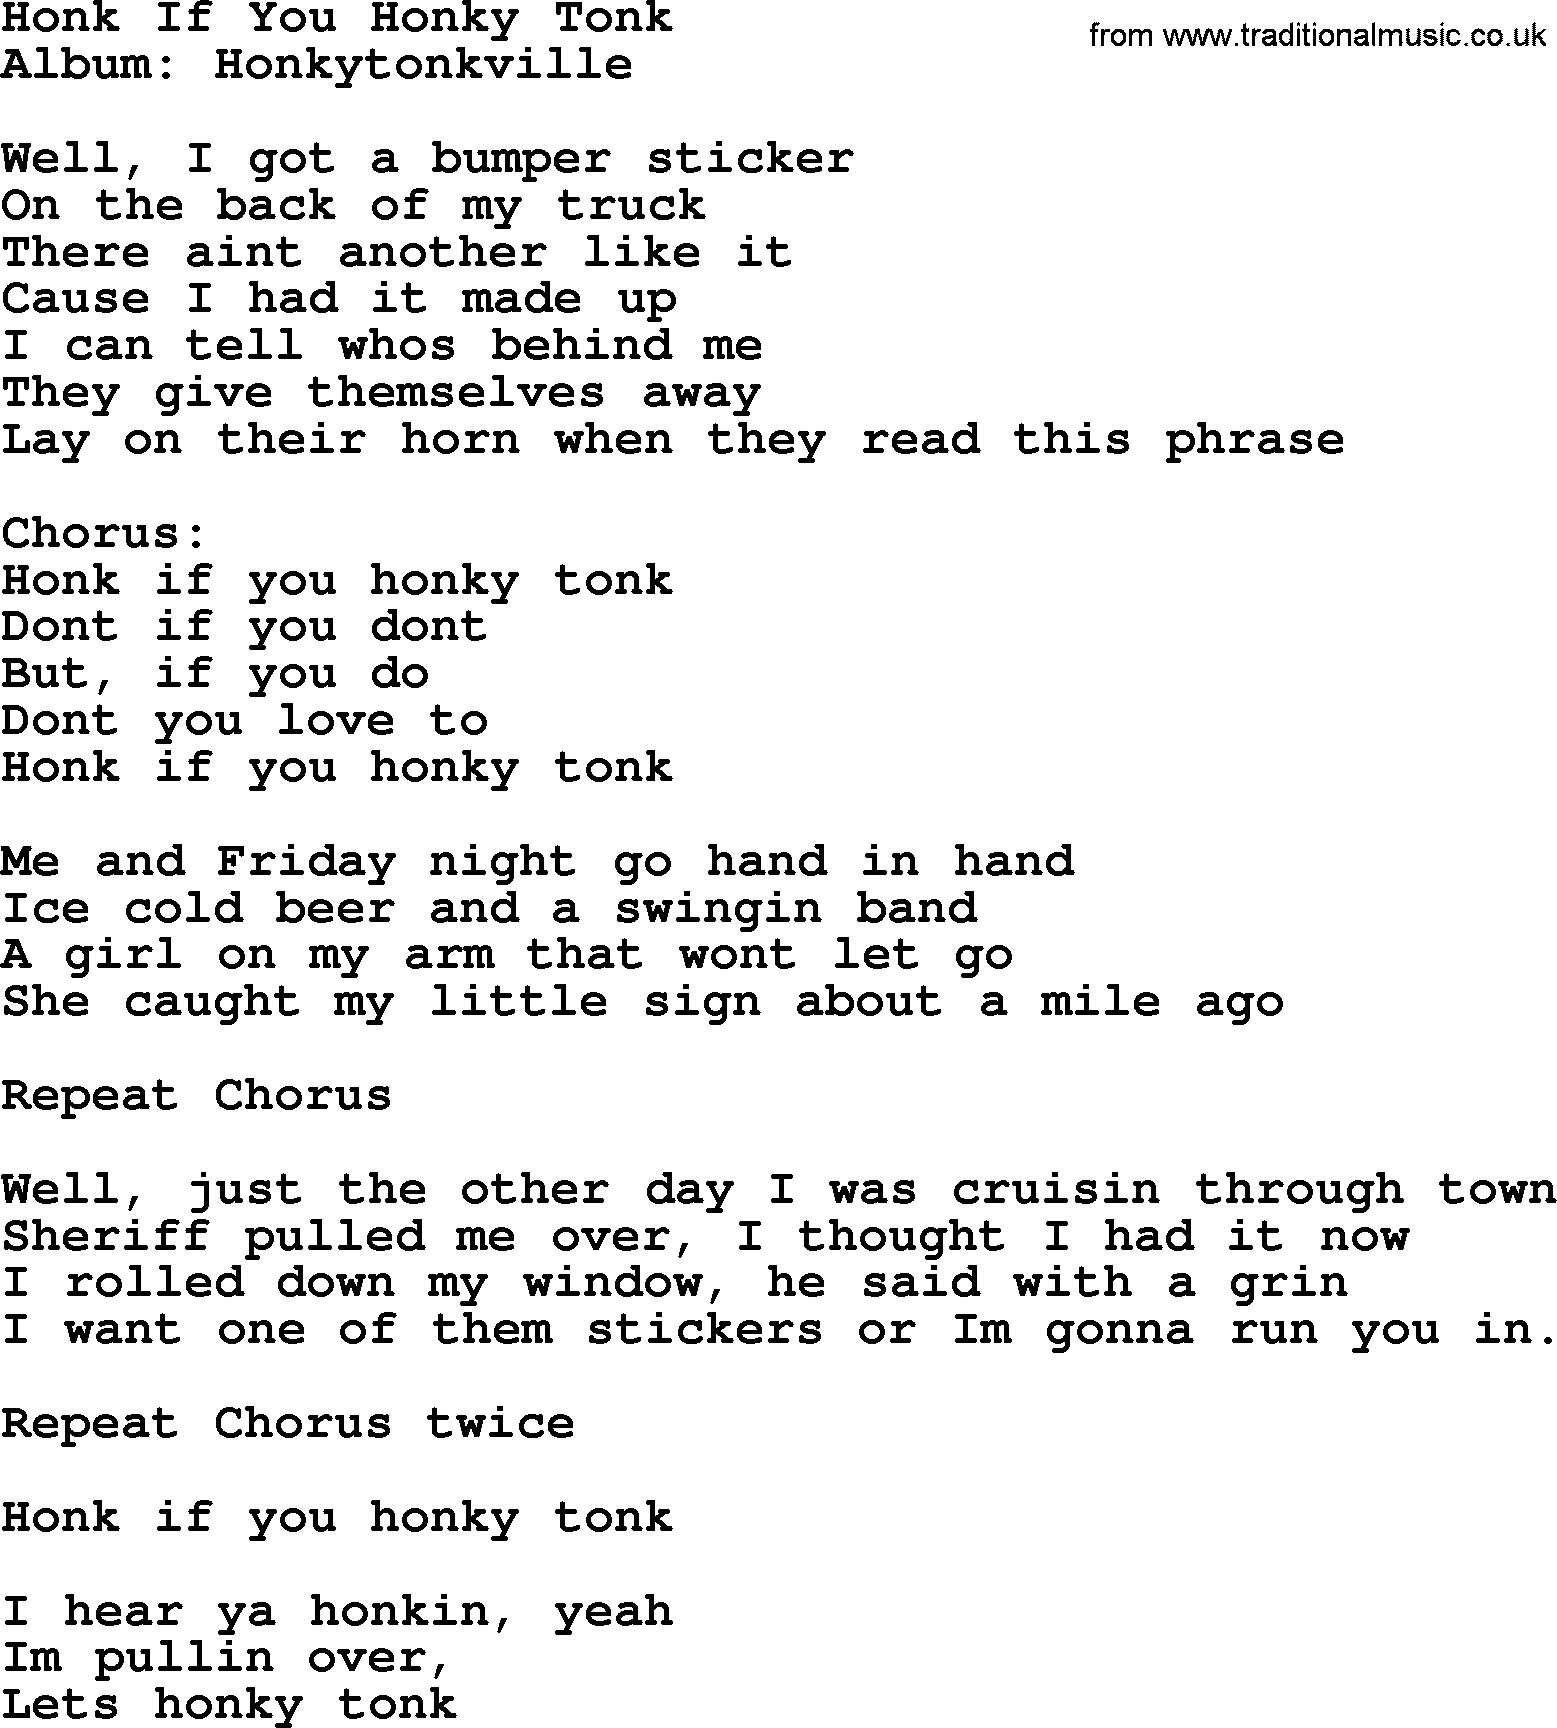 George Strait song: Honk If You Honky Tonk, lyrics